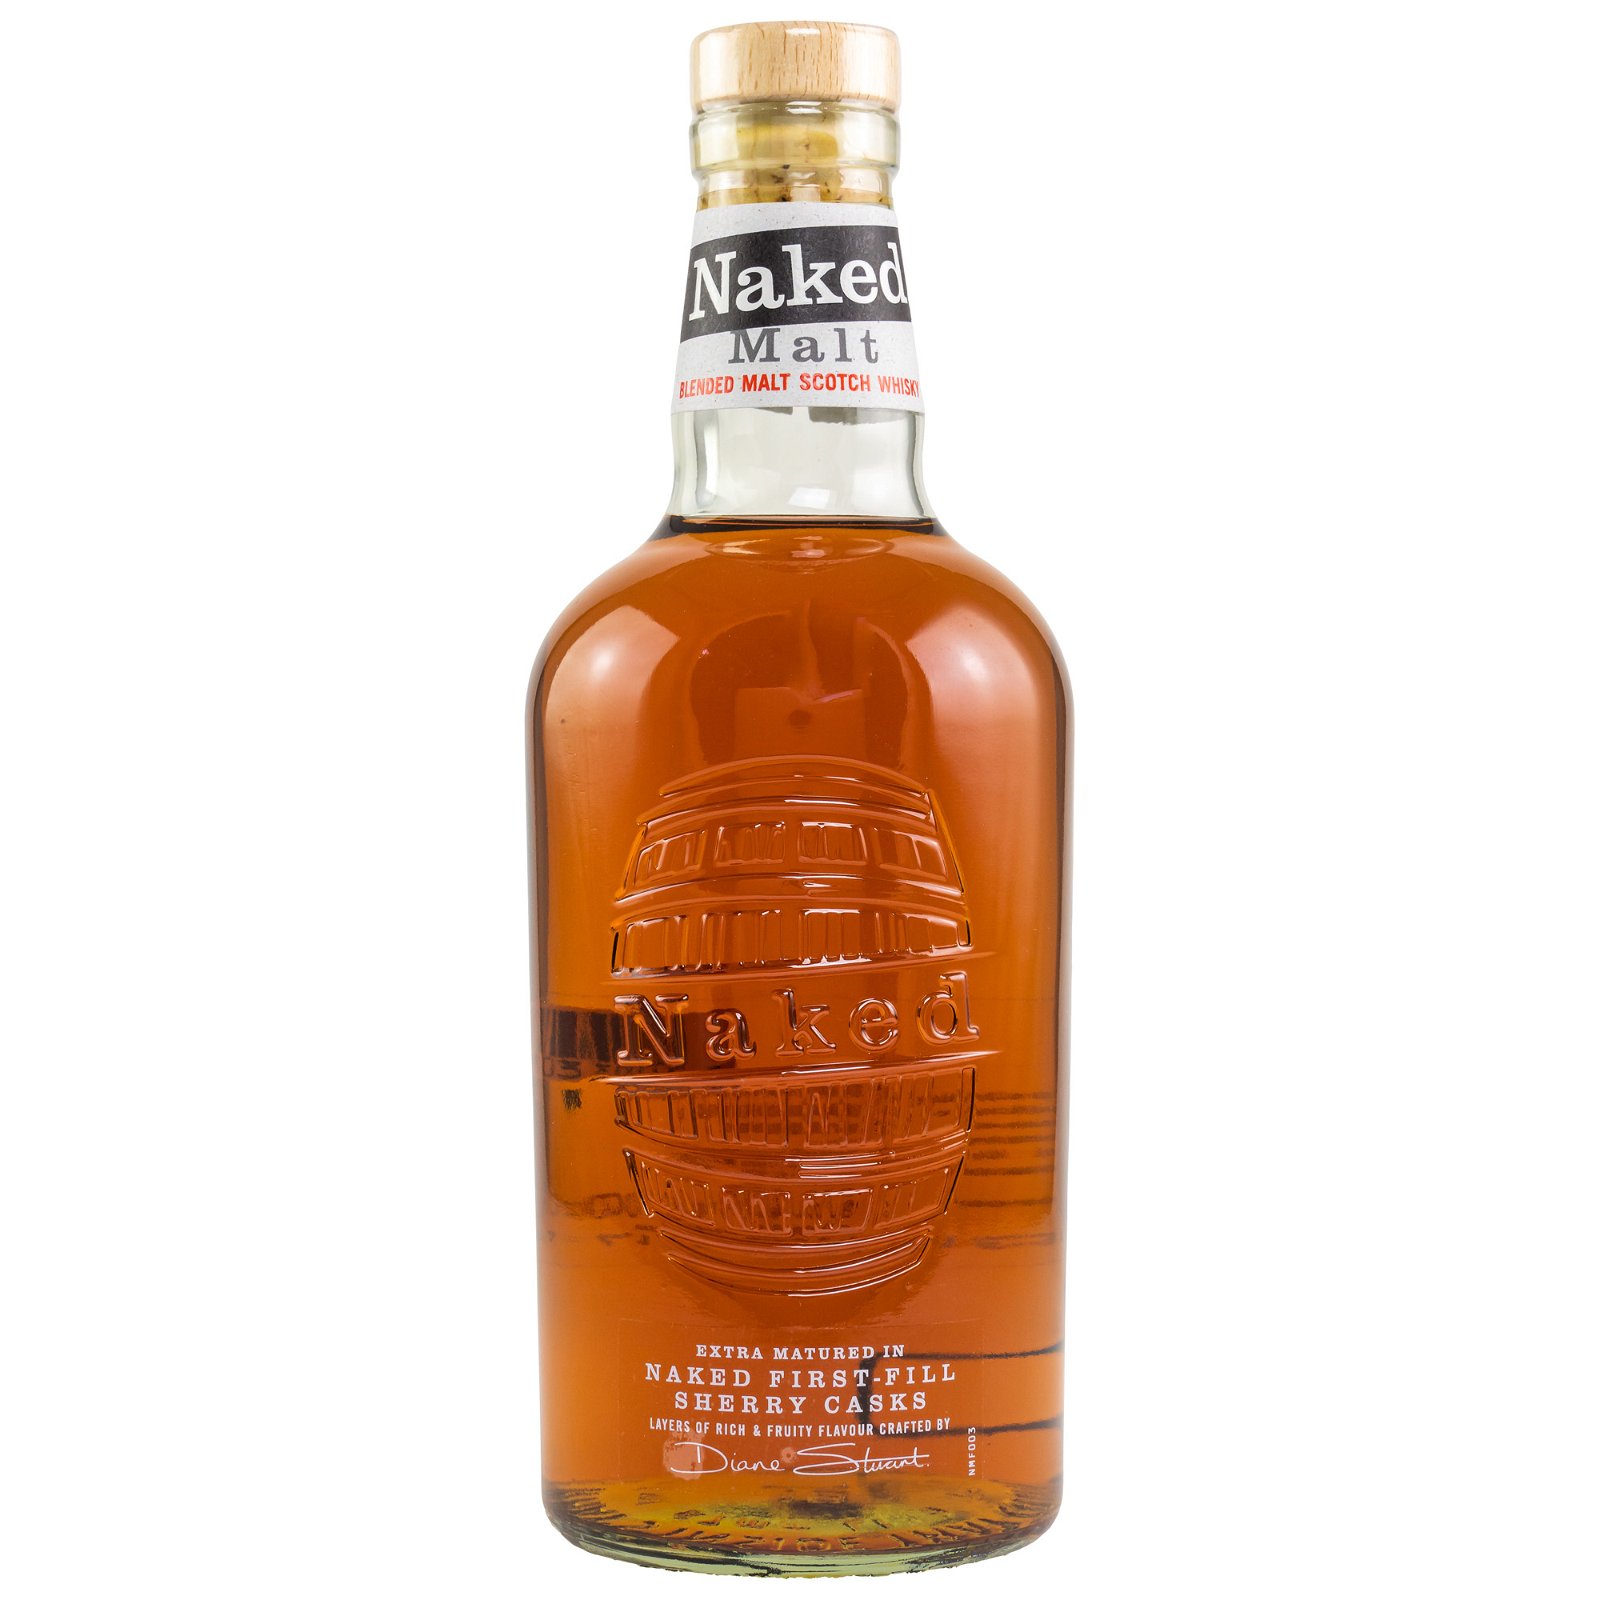 Naked Grouse First-Fill Sherry Casks Blended Malt Scotch Whisky